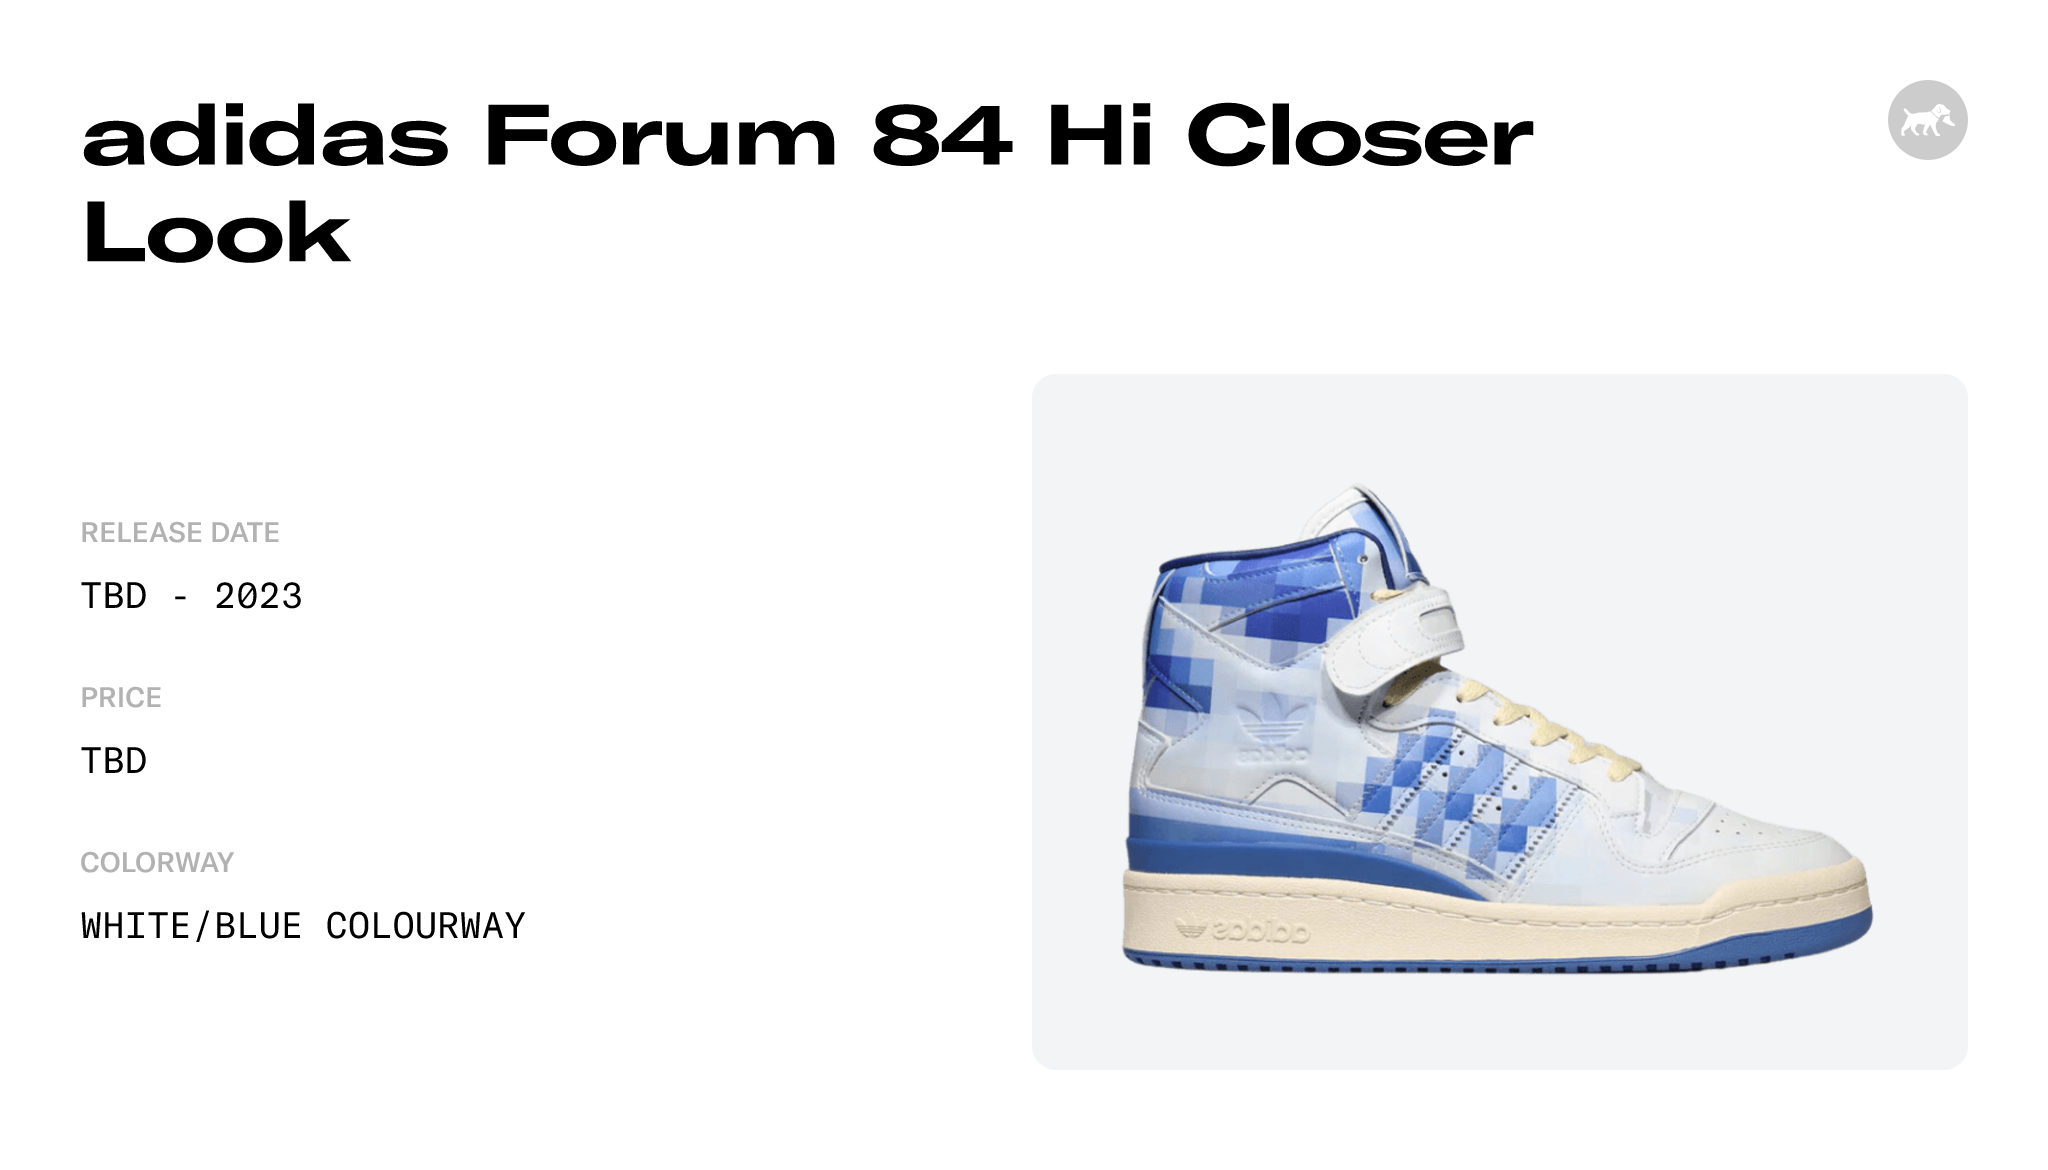 adidas Forum 84 Hi Closer Look - ID7440 Raffles and Release Date